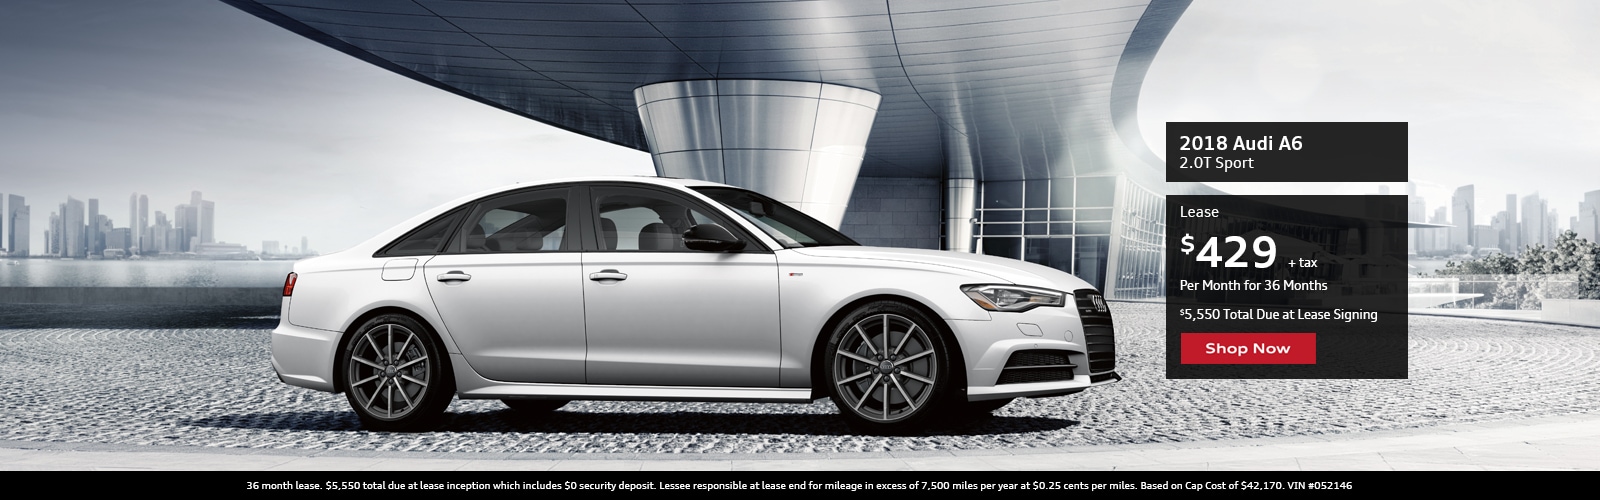 Audi Lease Specials Website